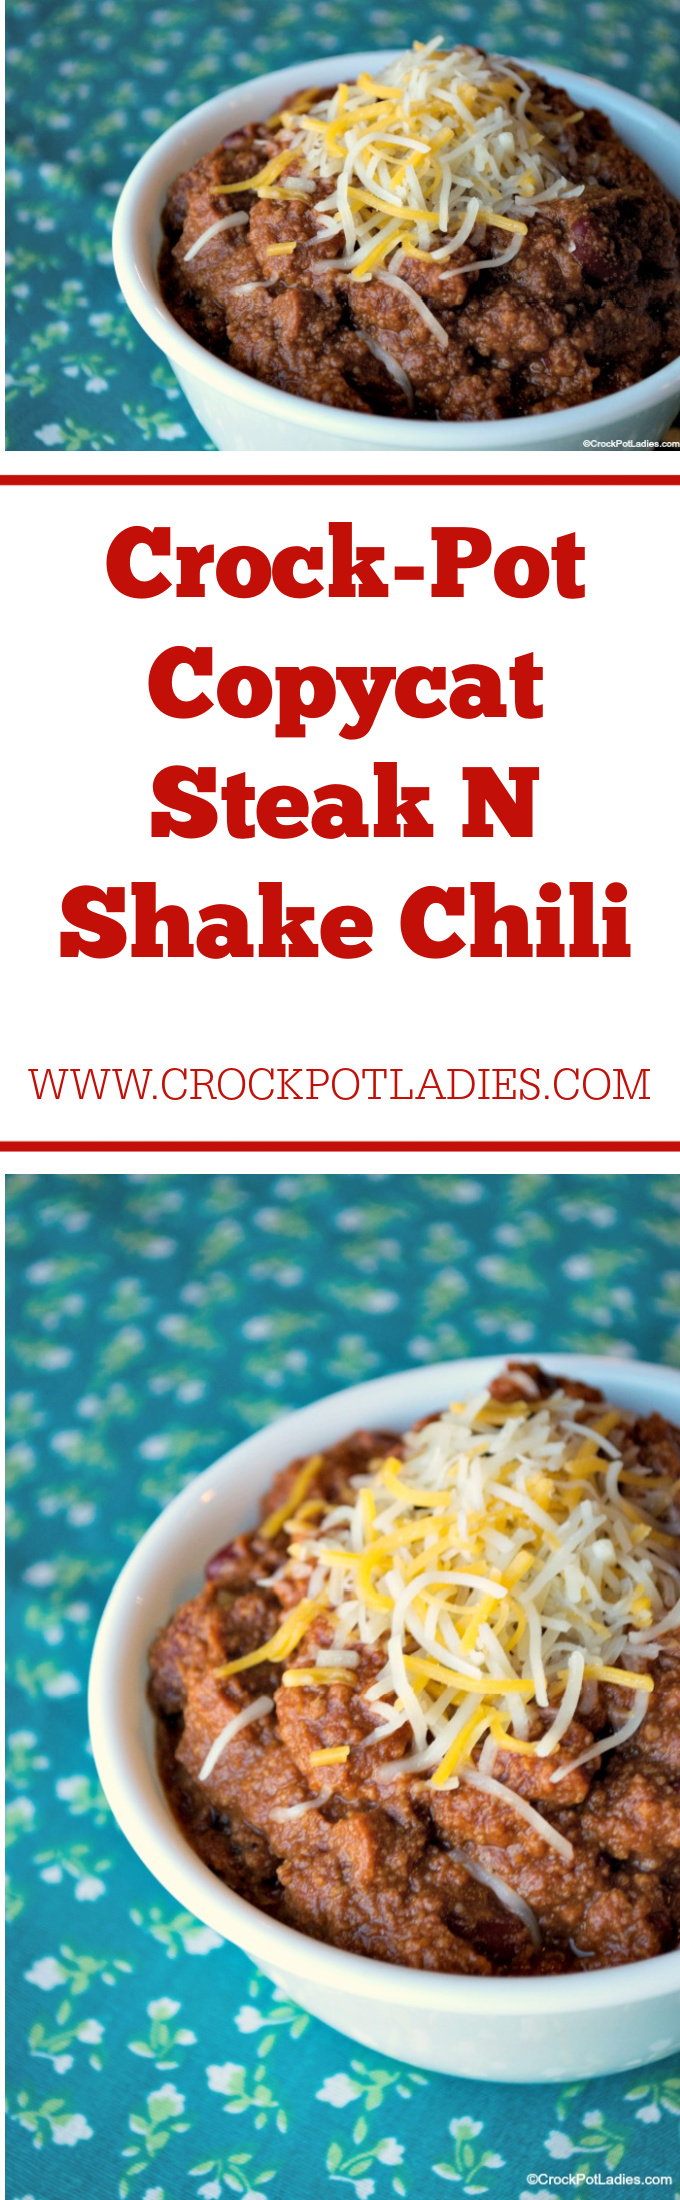 Crock-Pot Copycat Steak N Shake Chili